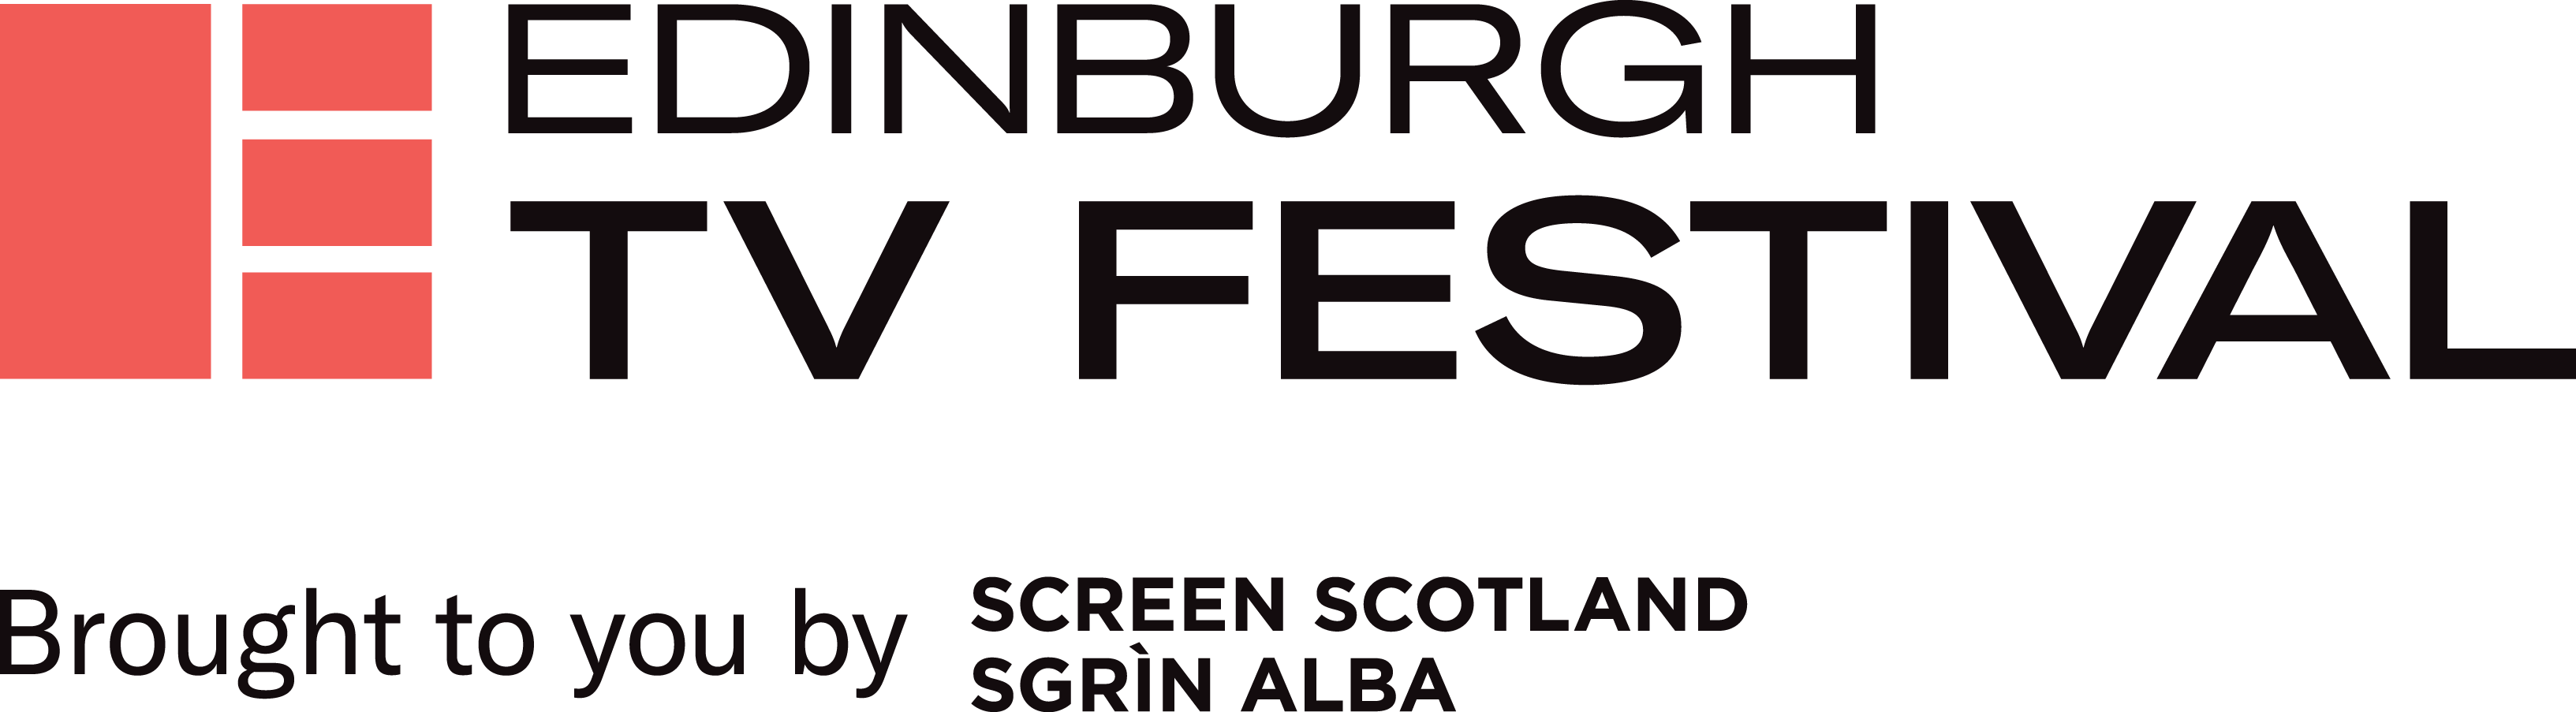 The Edinburgh International Television Festival logo